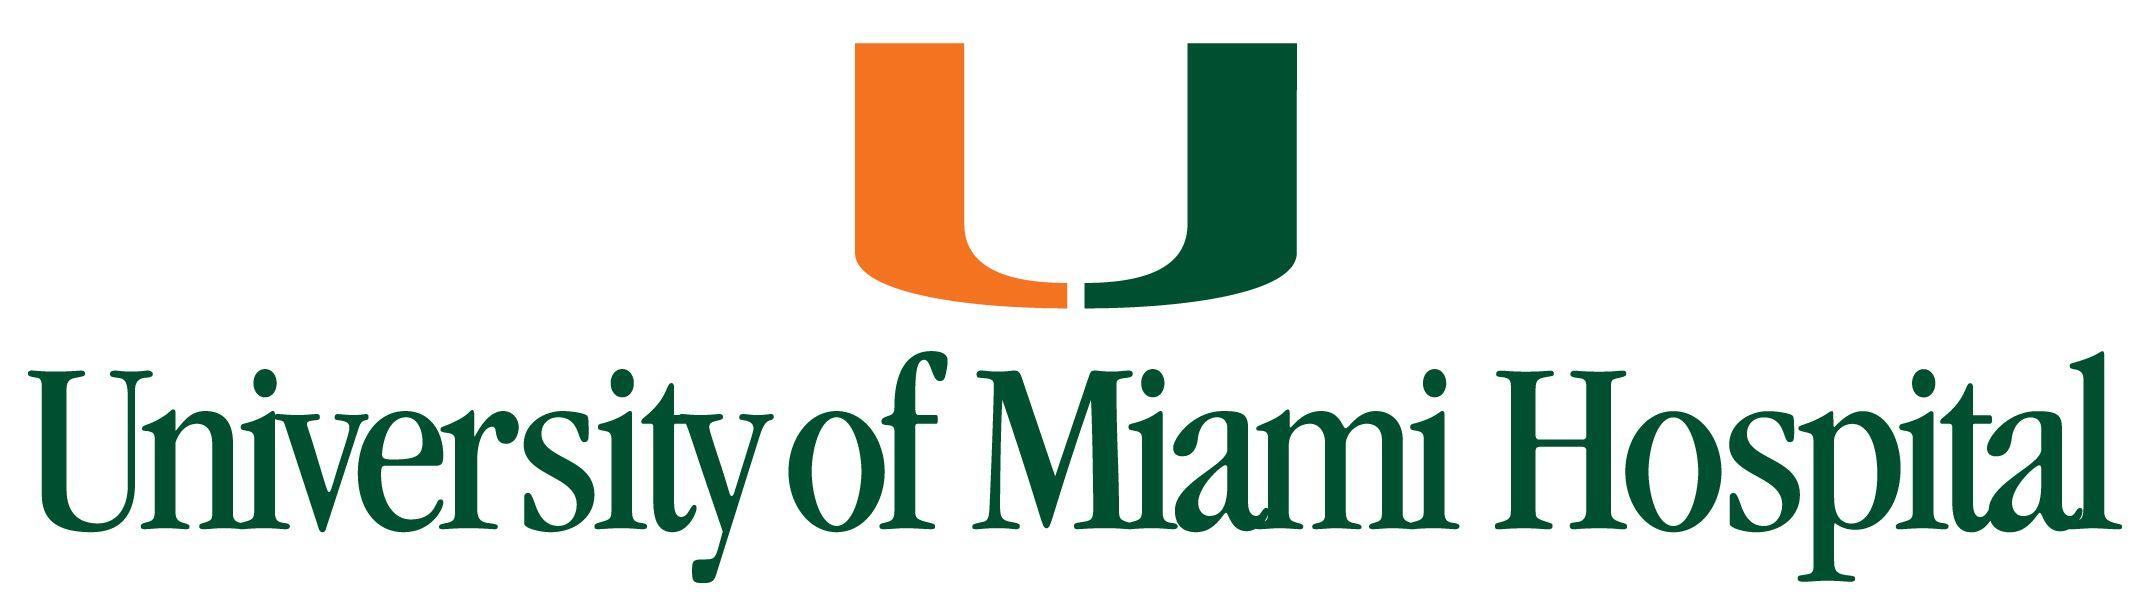 UHealth Logo - UHealth – University of Miami Hospital « Logos & Brands Directory